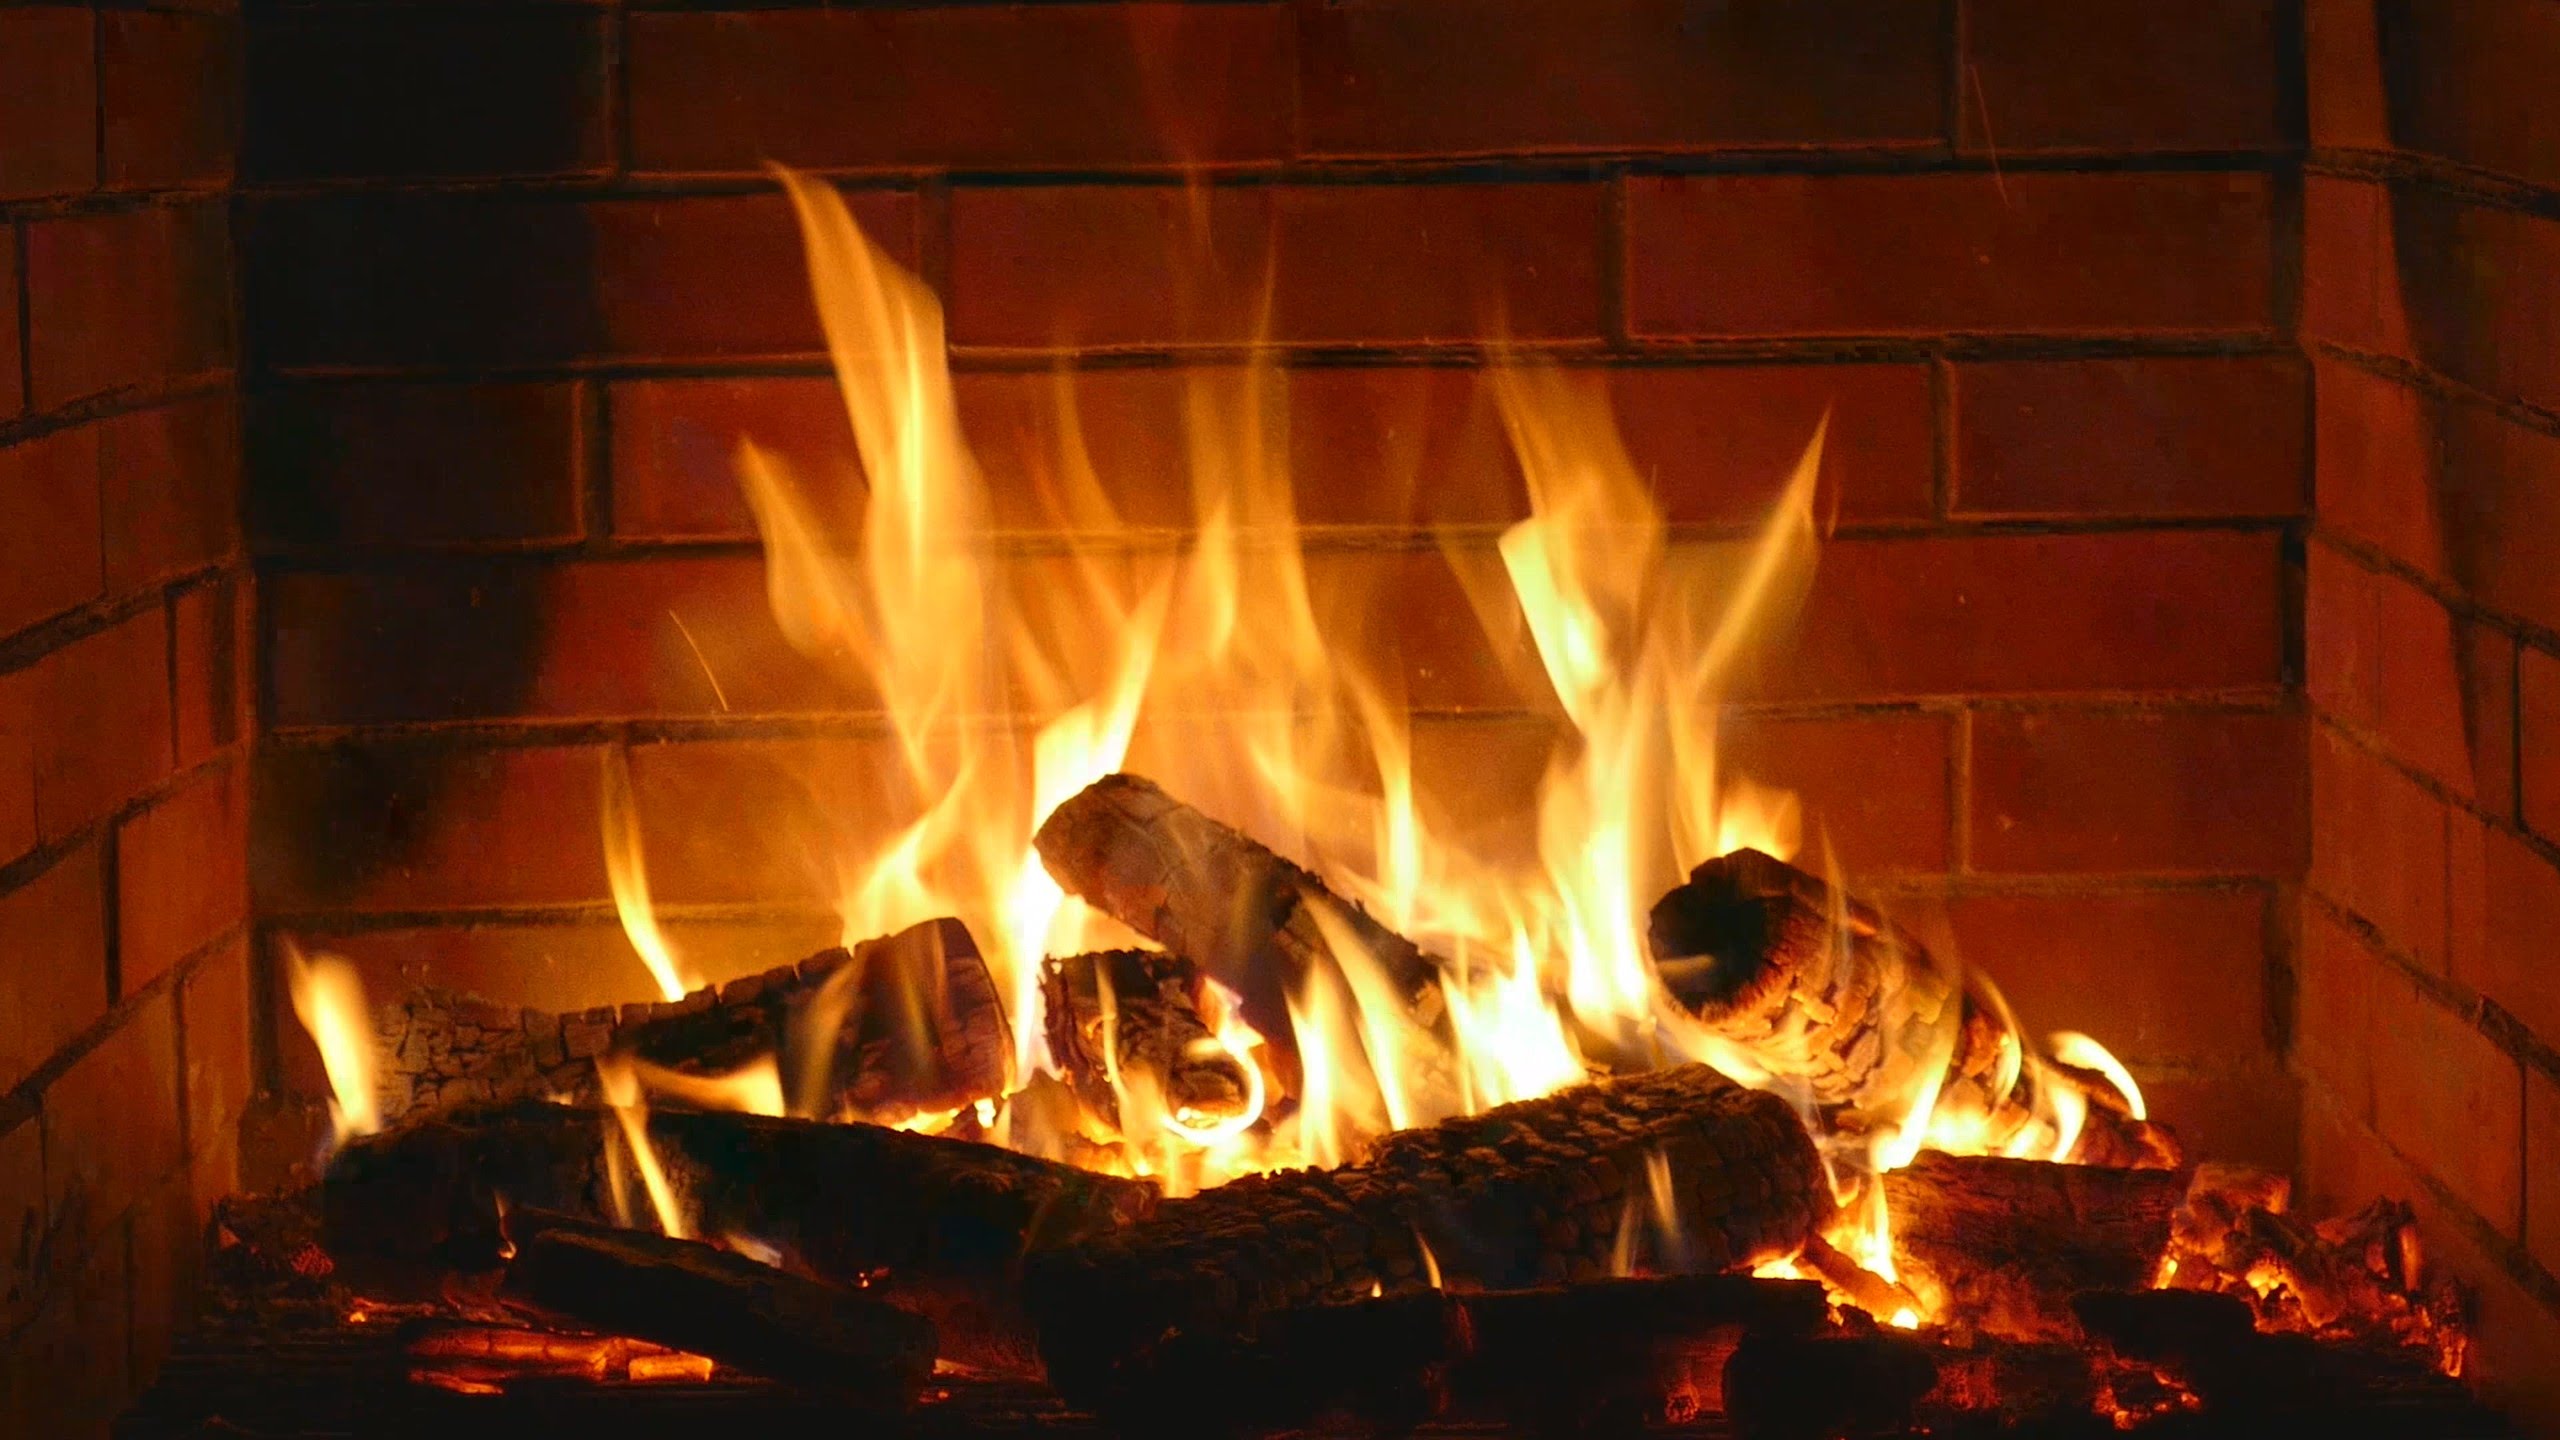 A warming fireplace...